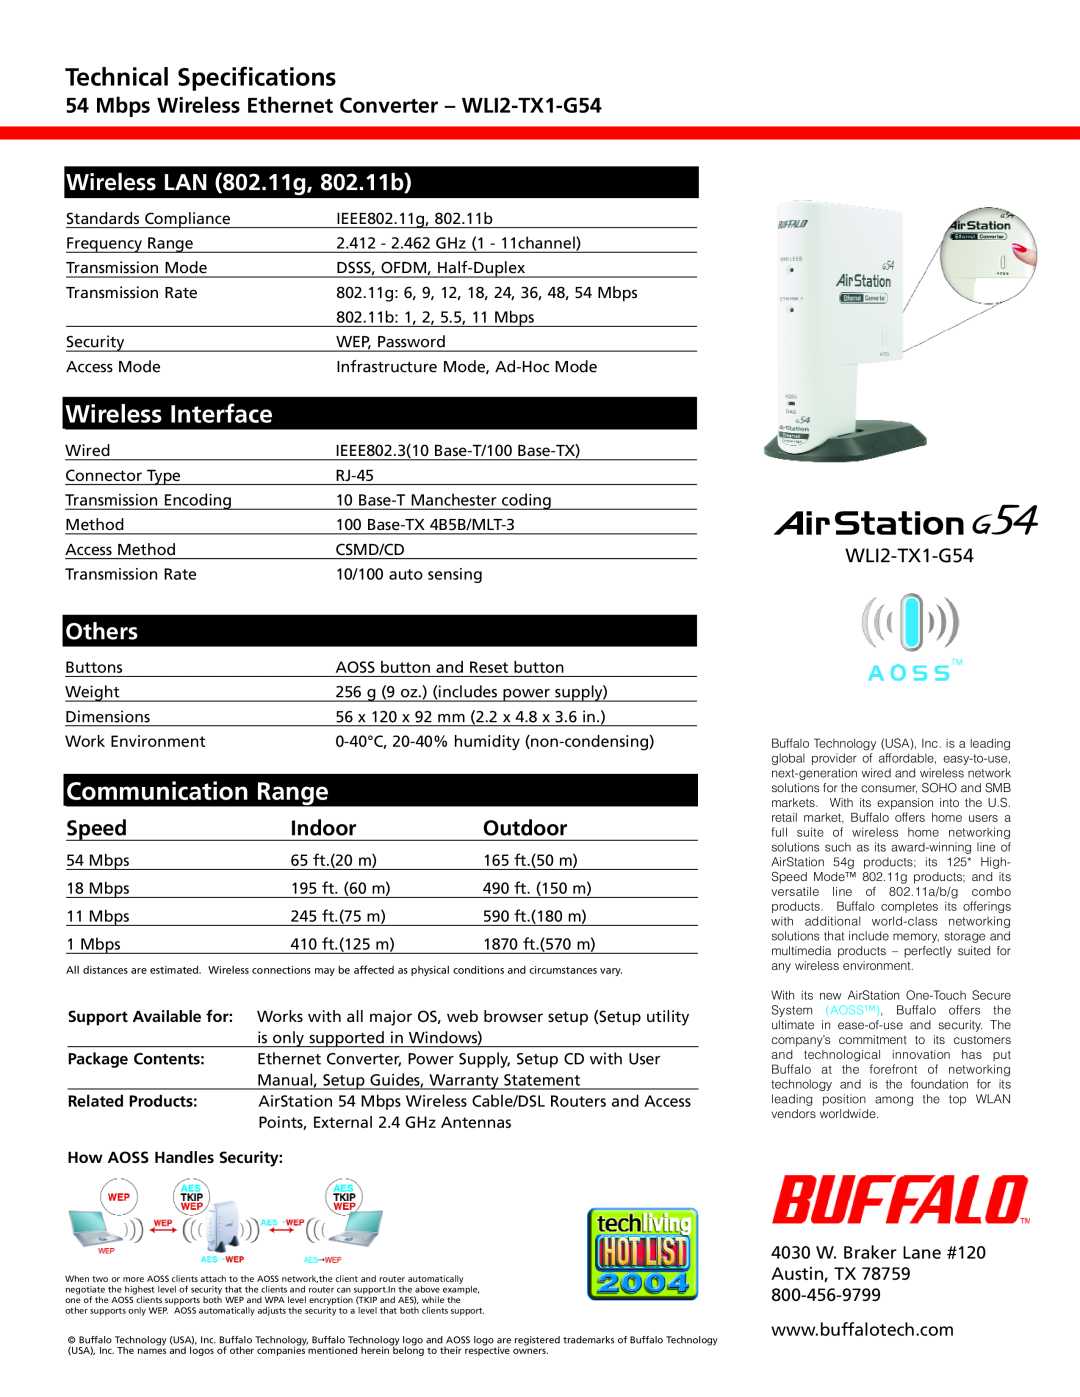 Buffalo Technology WLI2-TX1-G54 Speed, Indoor, Outdoor, 4030 W. Braker Lane #120 Austin, TX, Technical Specifications 